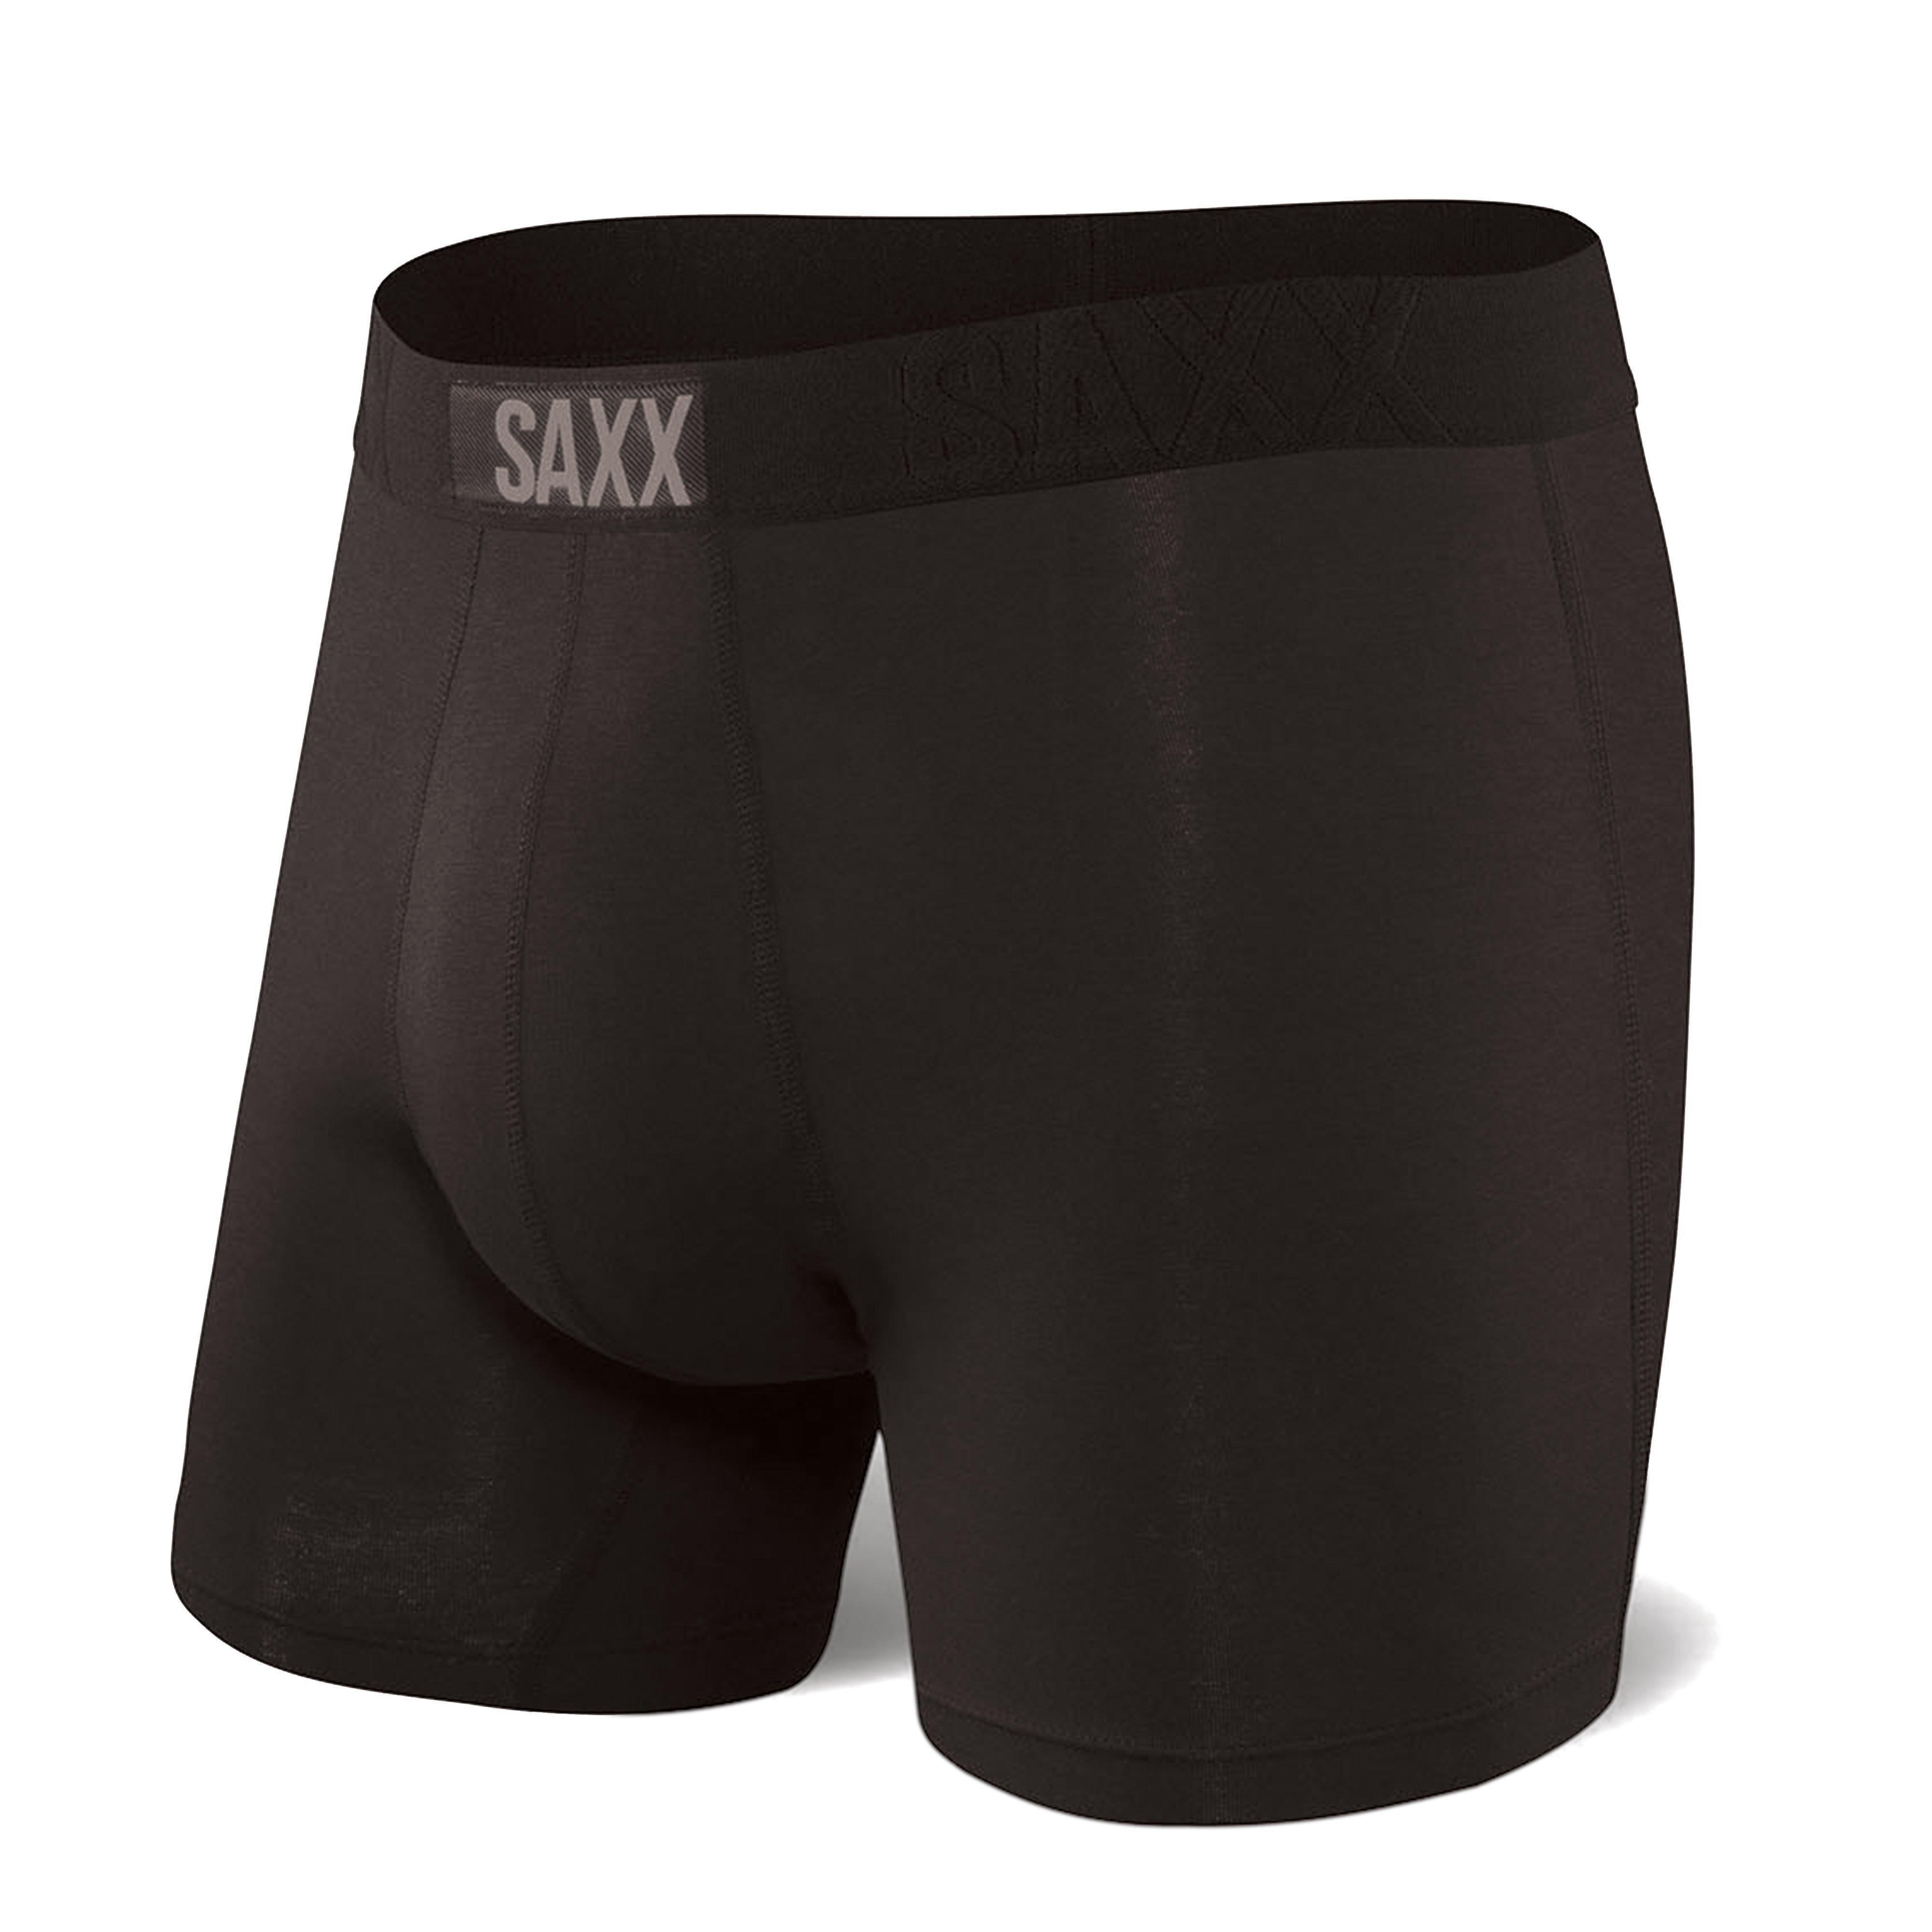 Saxx Men's Vibe Boxer Brief Review